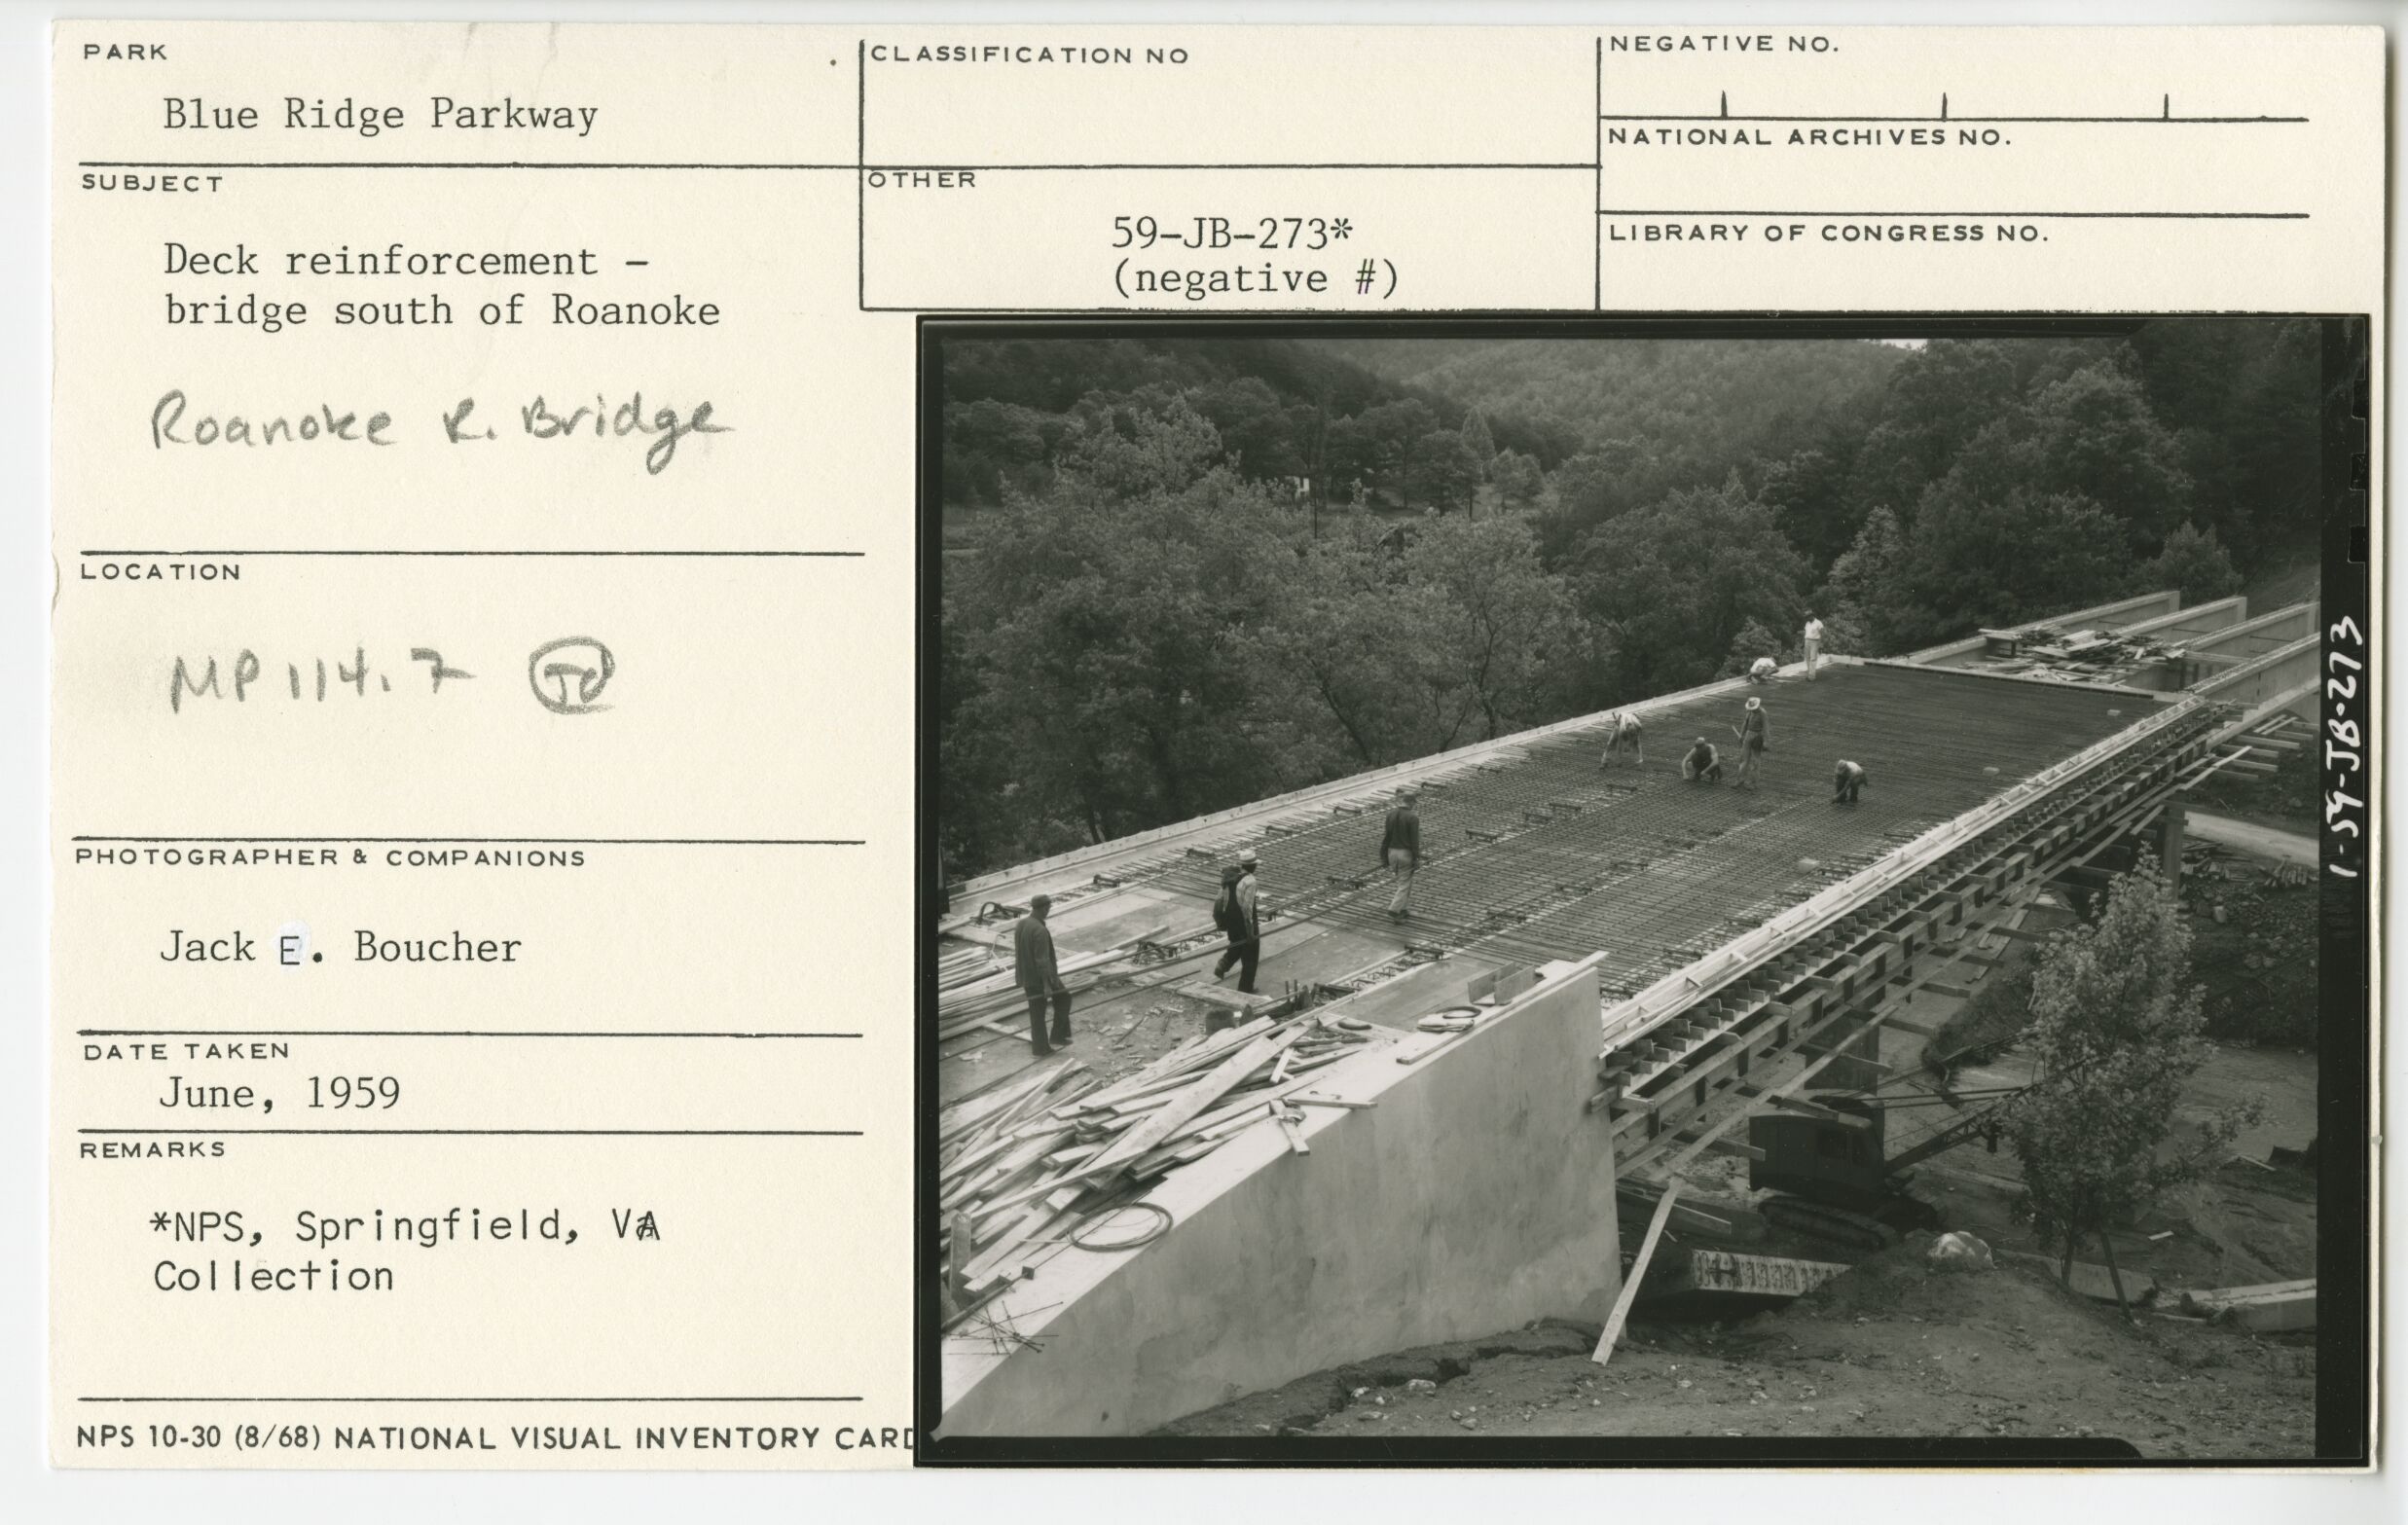 Deck reinforcement - bridge south of Roanoke